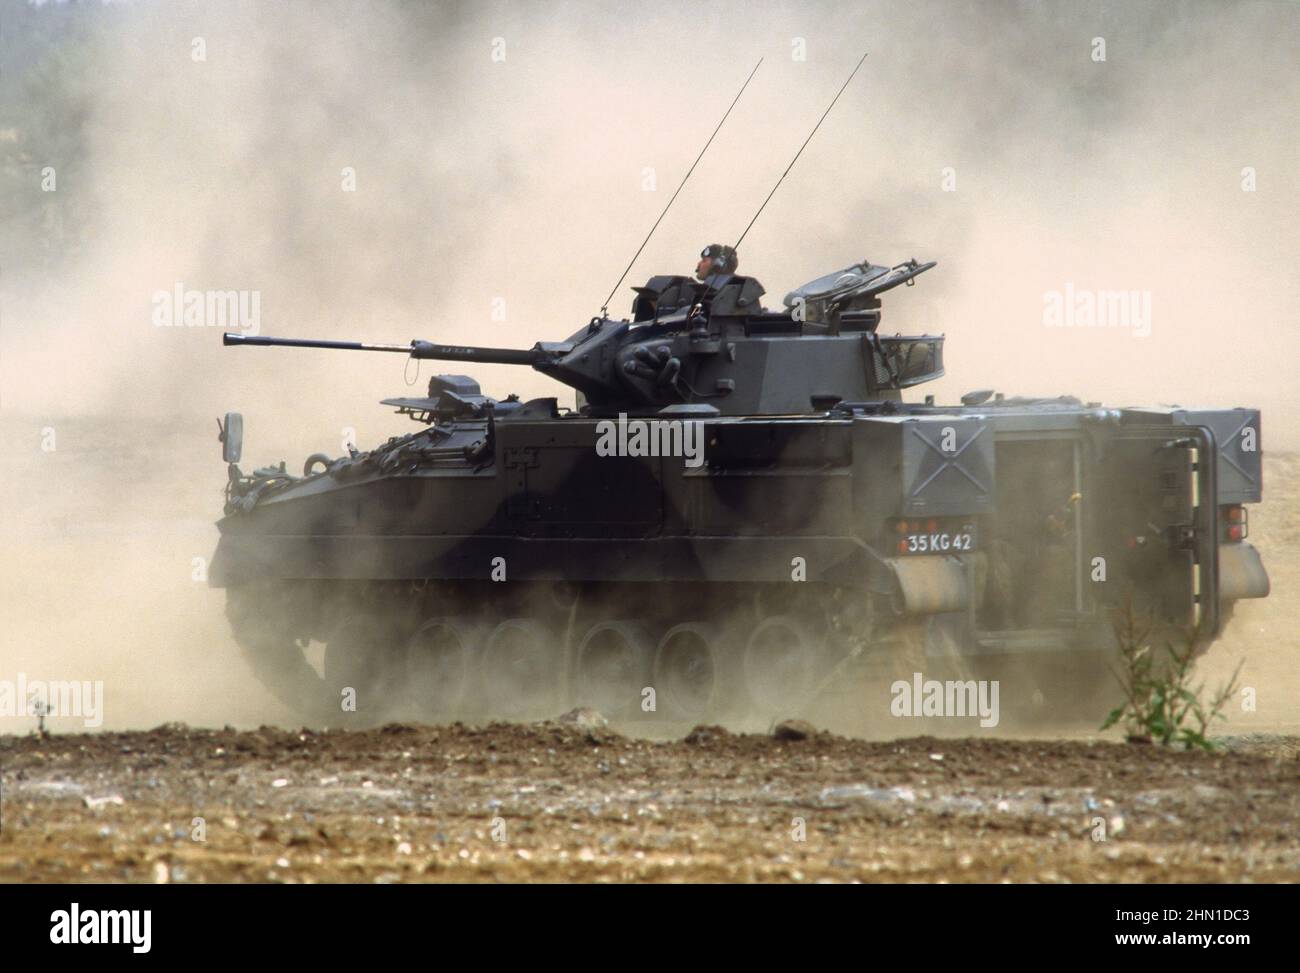 - Royal Army, infantry armoured fighting vehicle 'Warrior'   - Royal Army, veicolo corazzato da combattimento per fanteria 'Warrior' Stock Photo